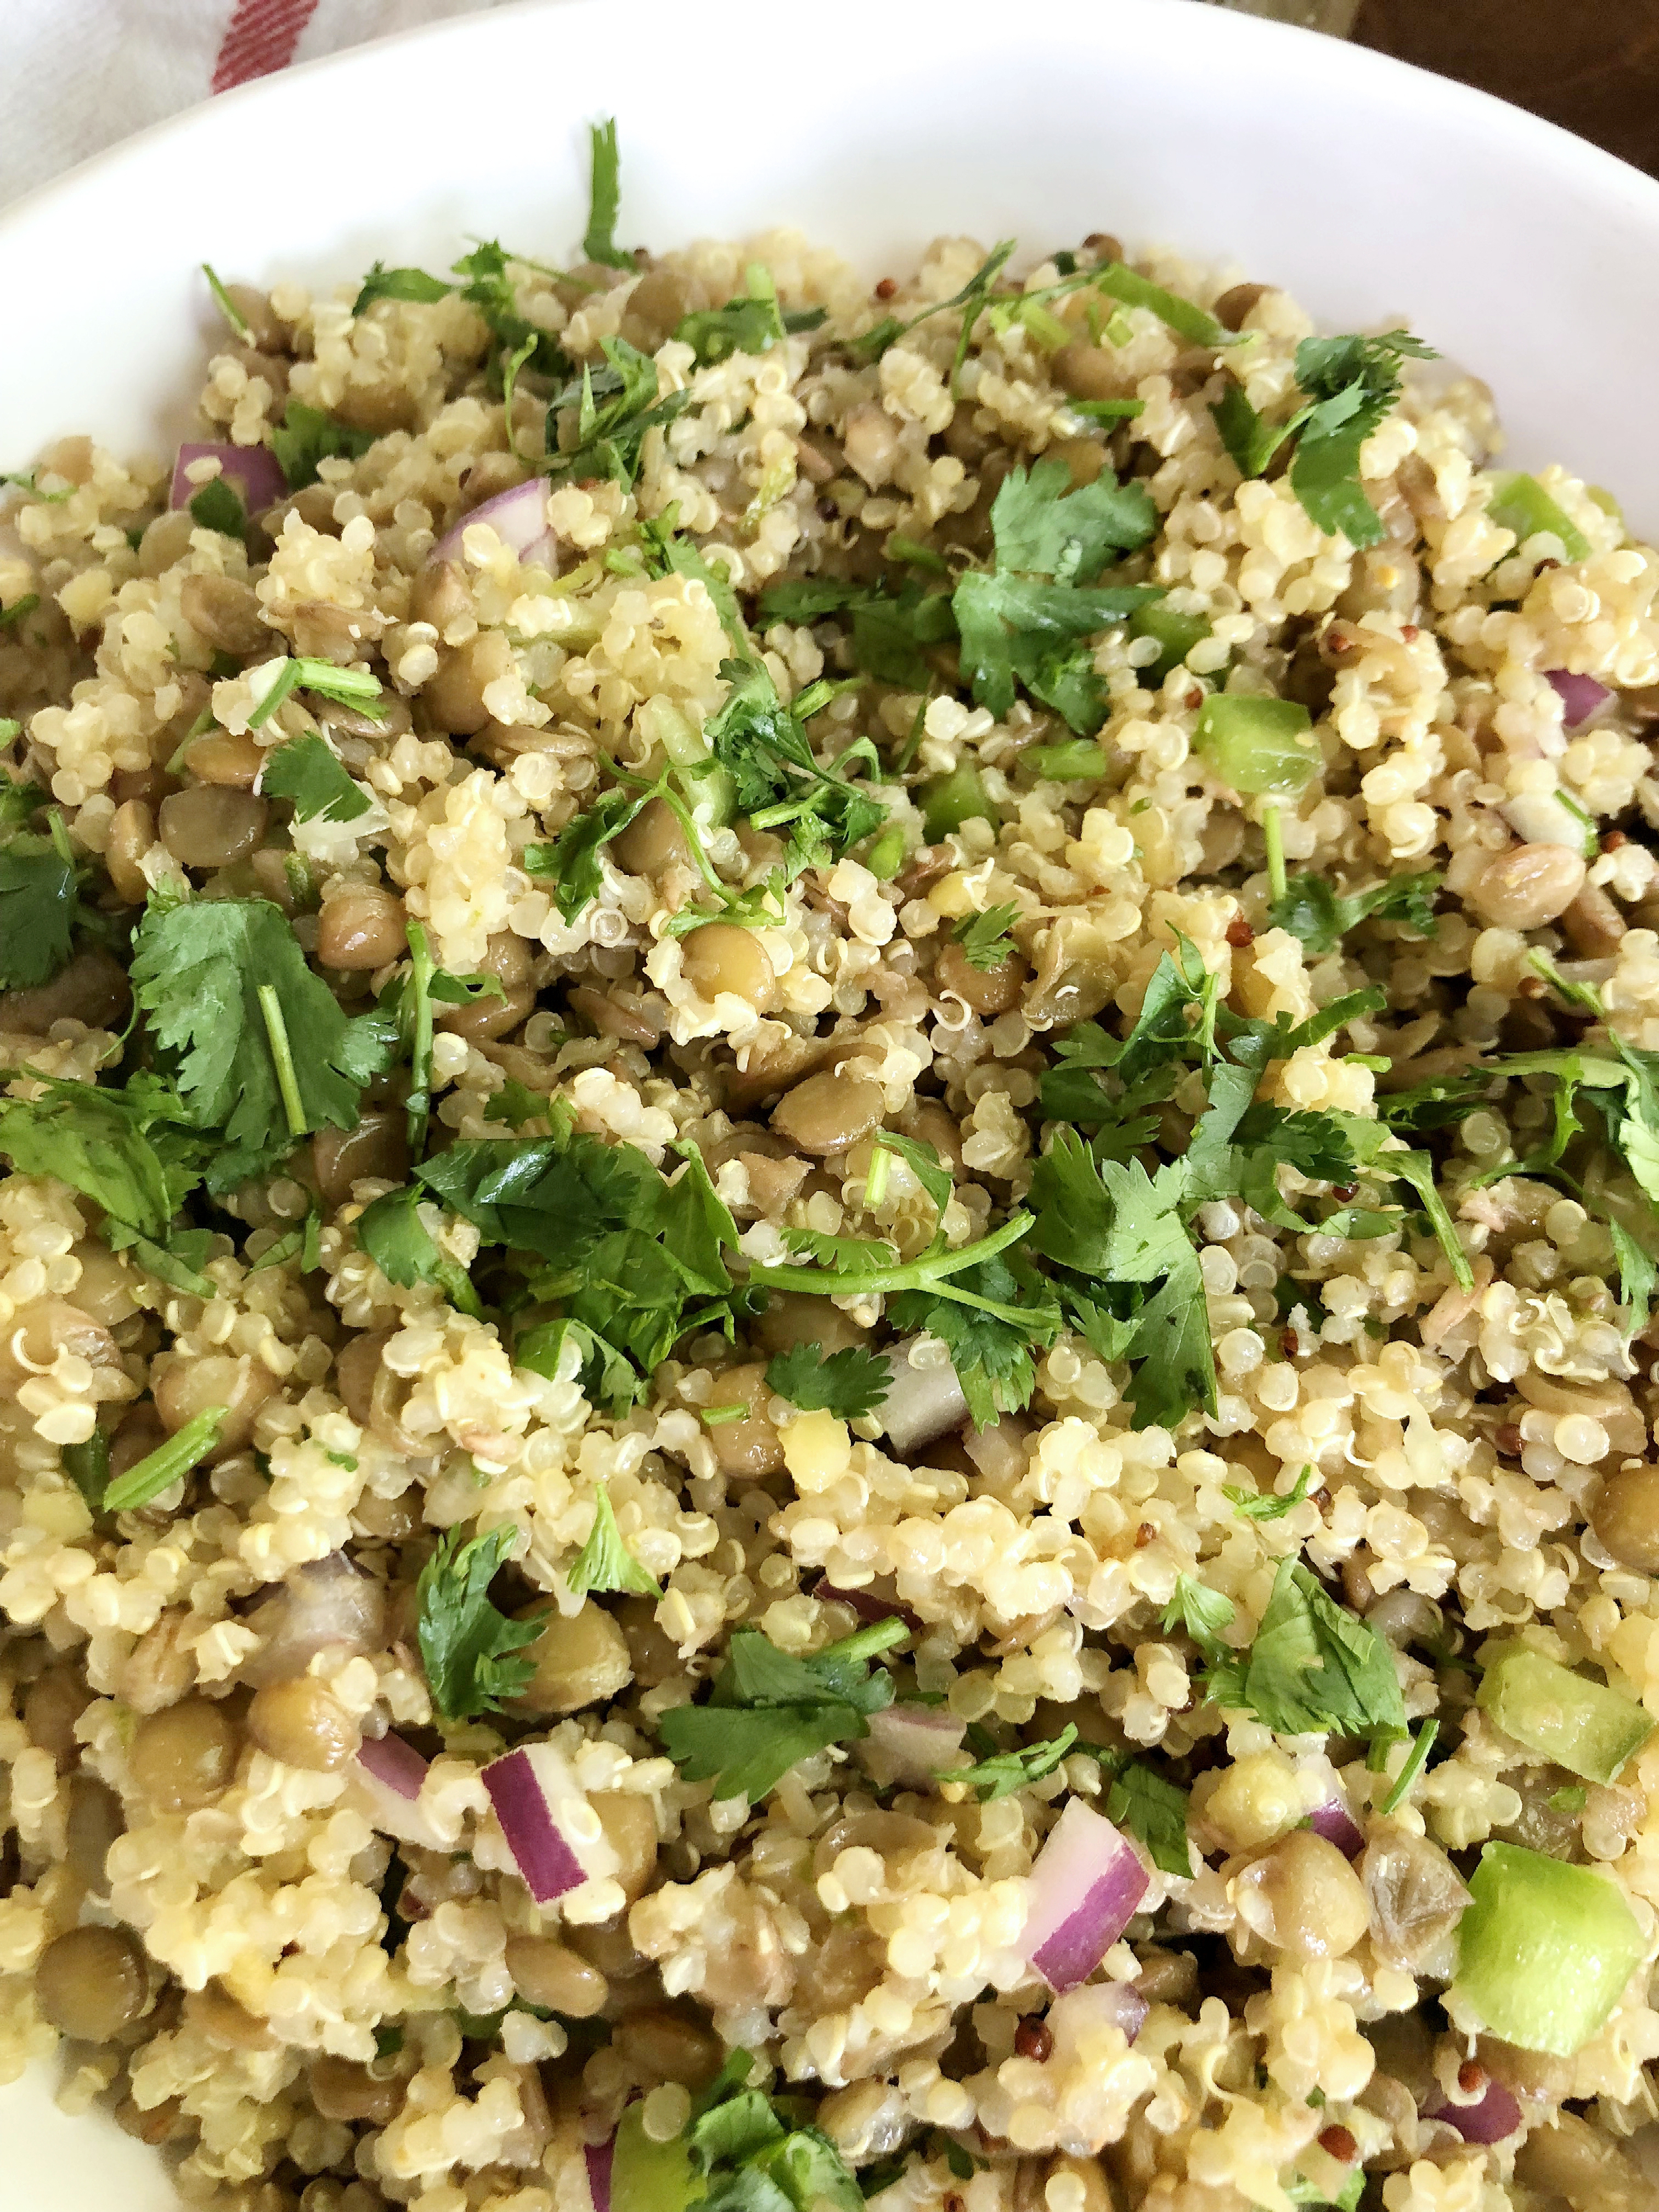 Quinoa and Lentil Salad with homemade vinaigrette